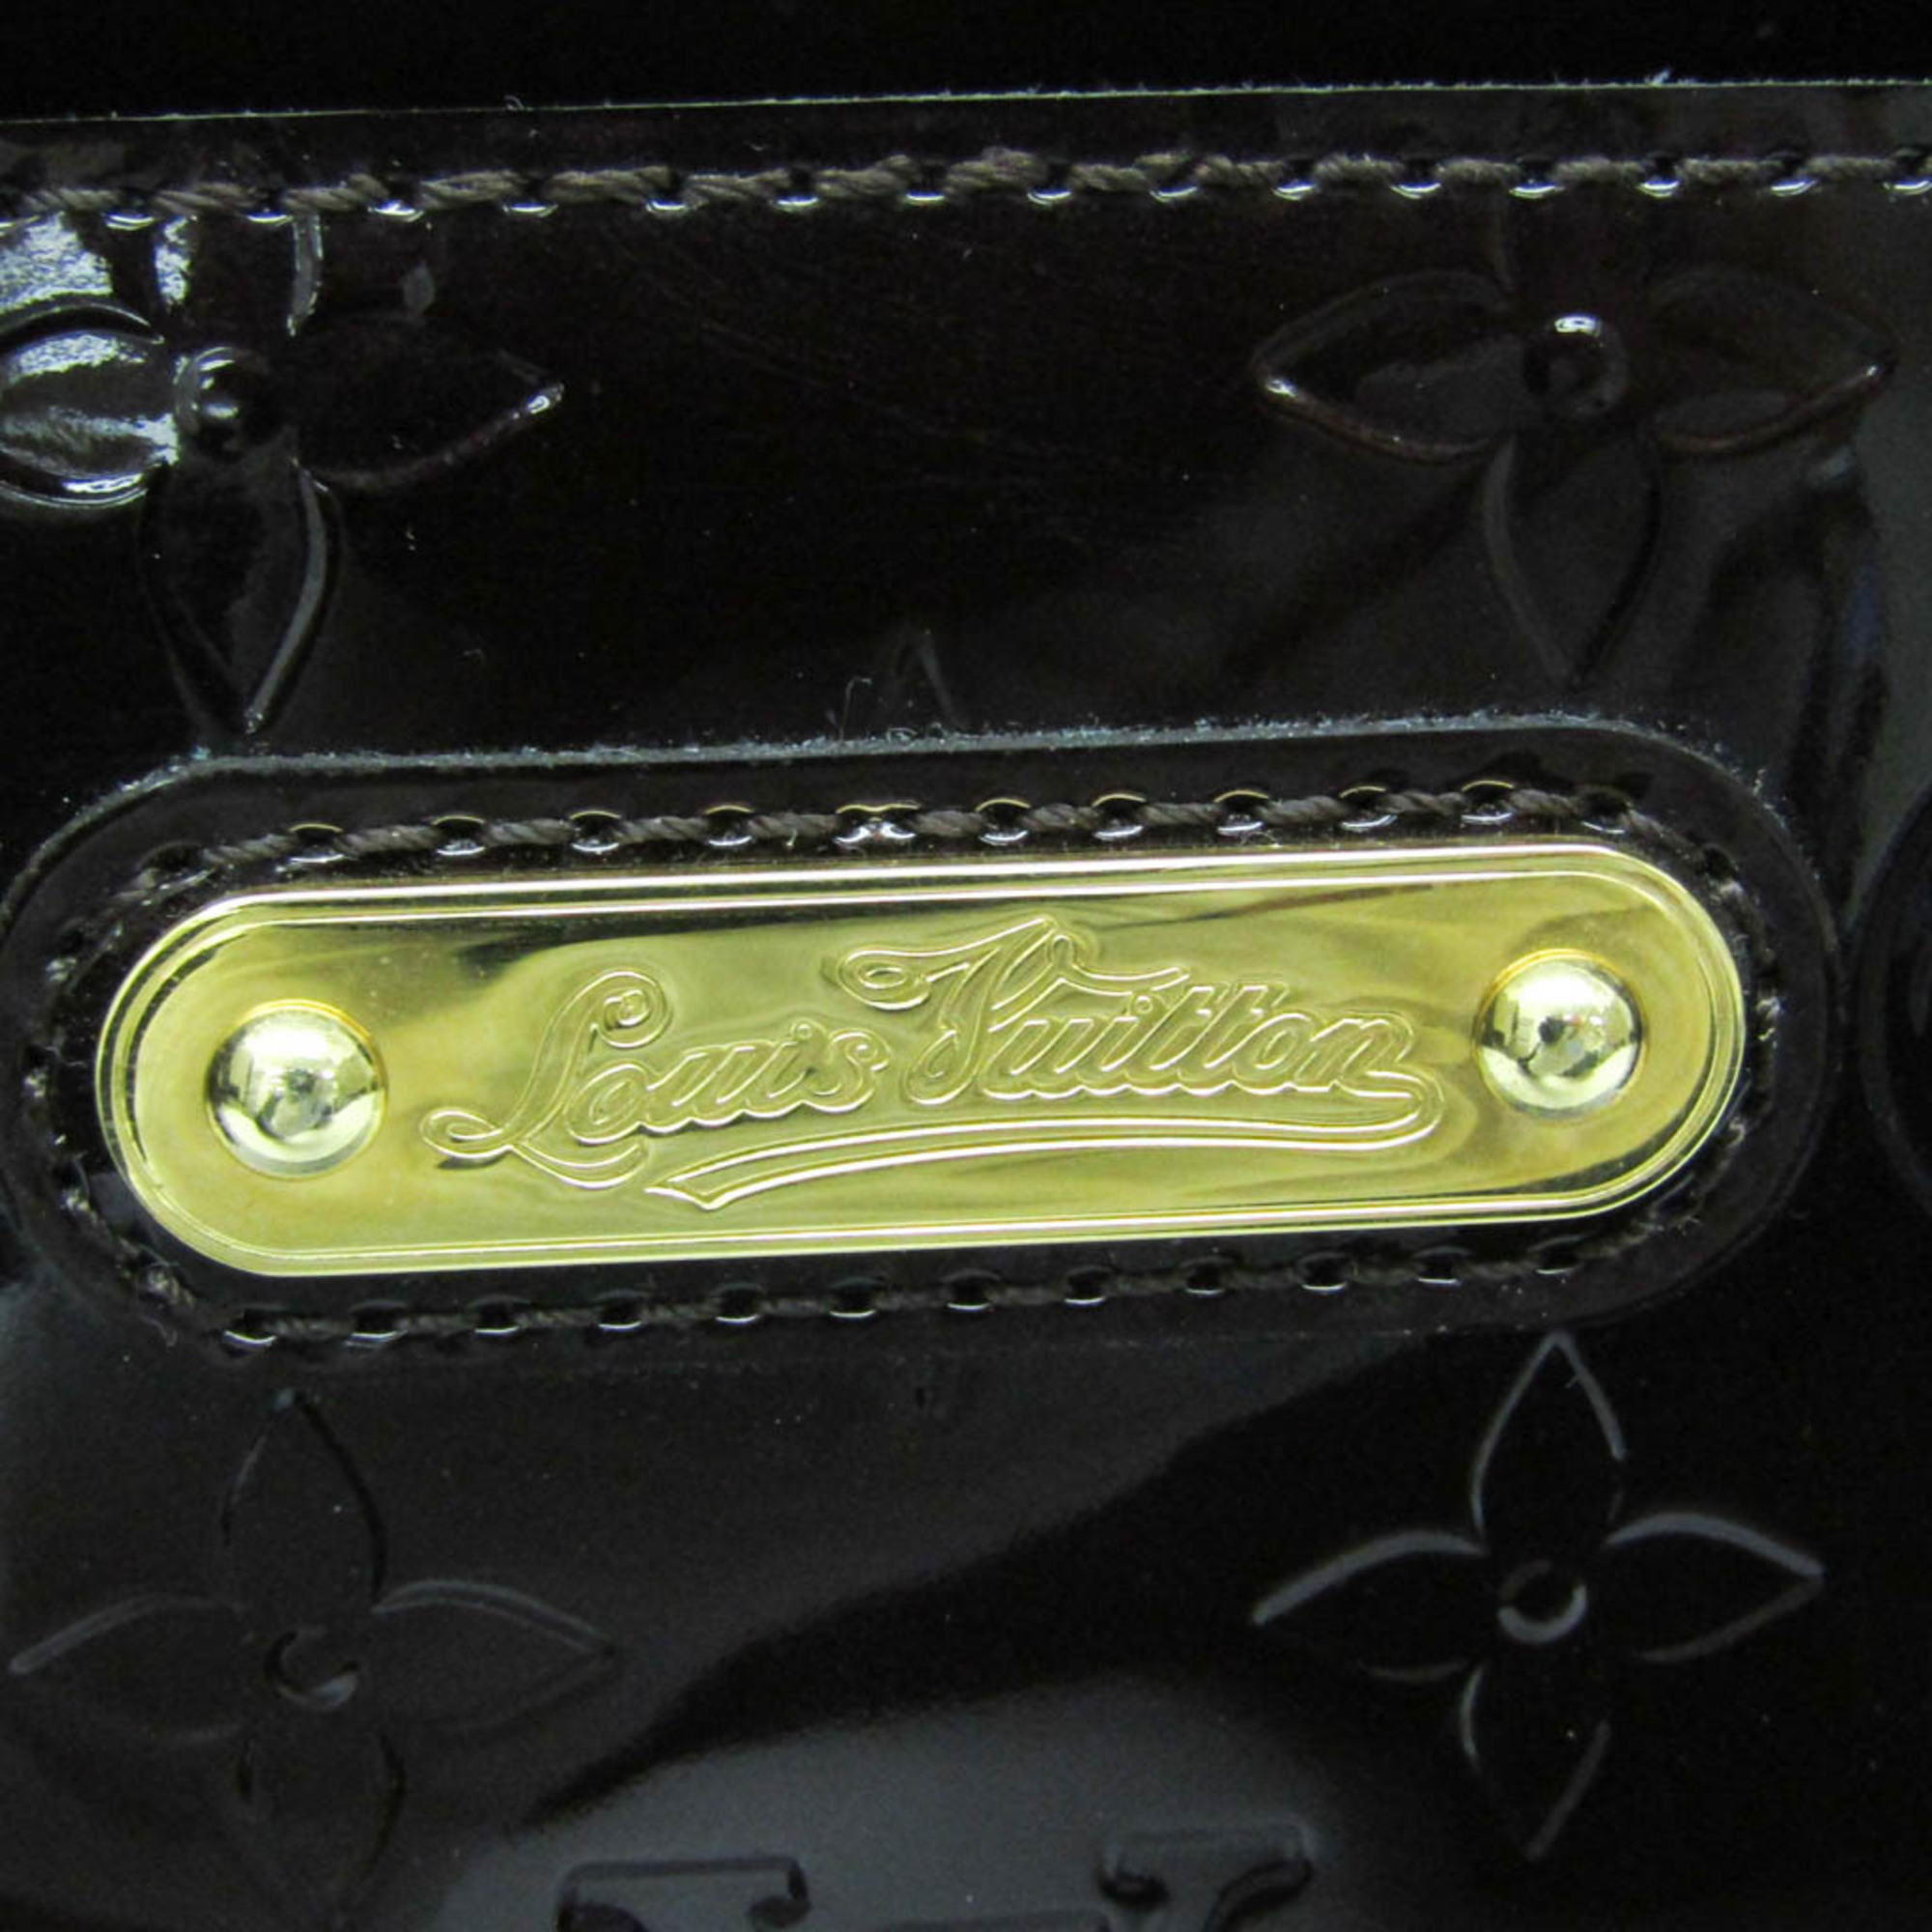 Louis Vuitton Monogram Vernis Wilshire PM M93641 Women's Handbag Amarante